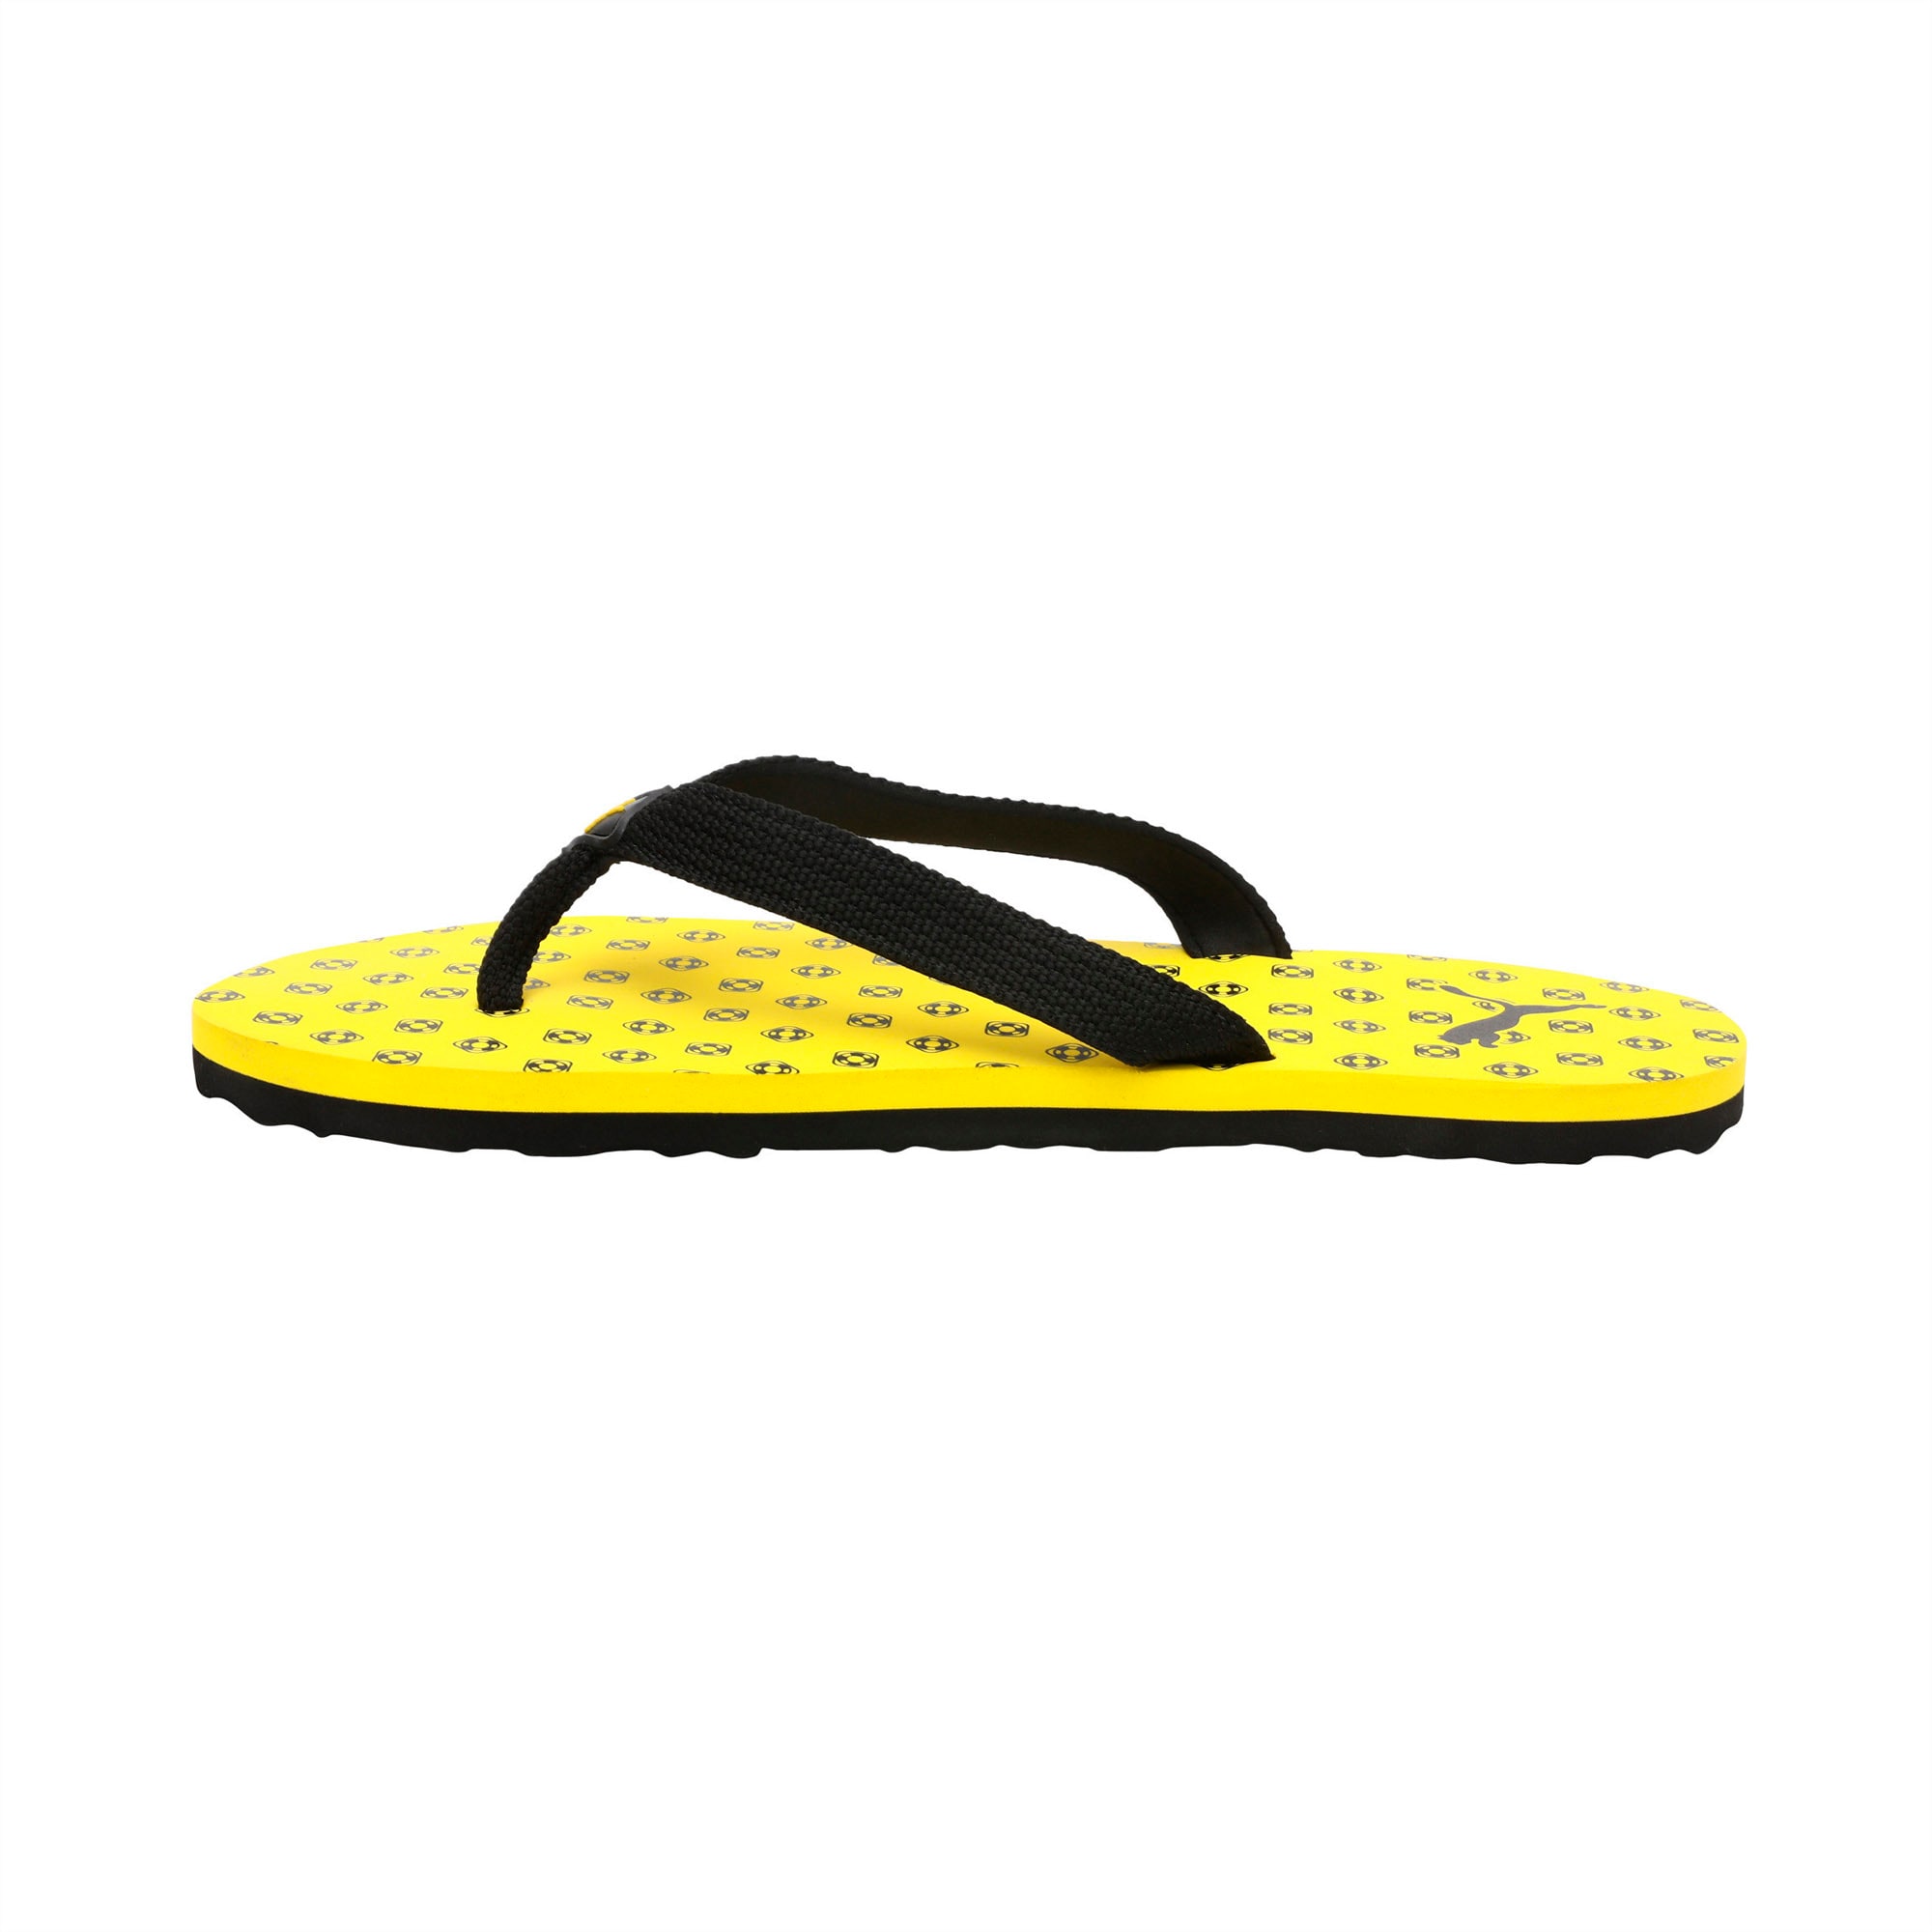 puma black and yellow flip flops